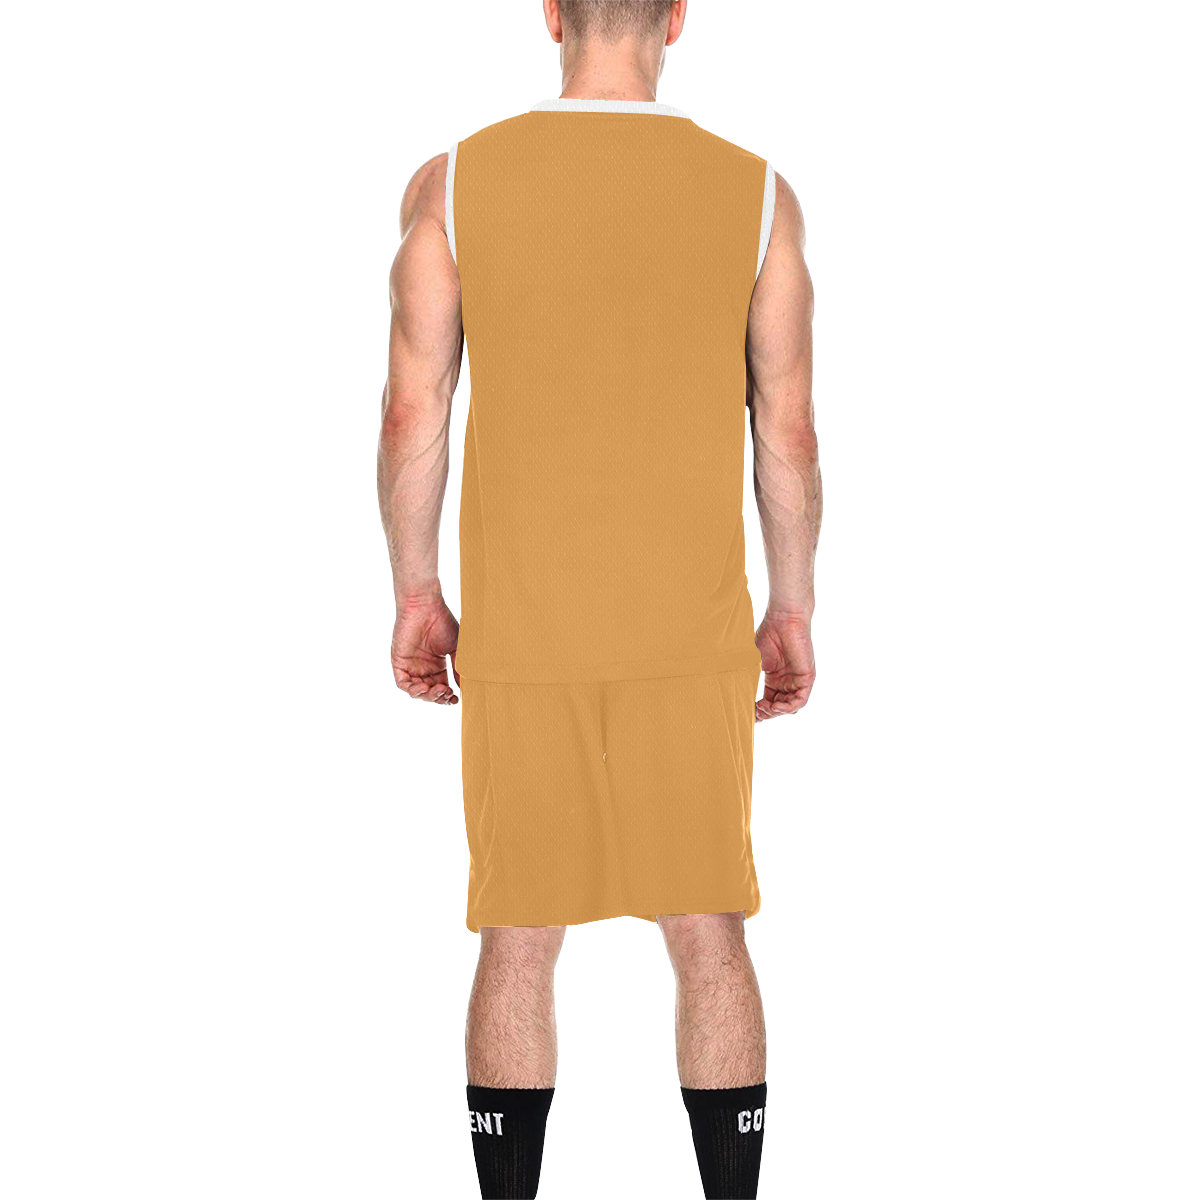 color butterscotch All Over Print Basketball Uniform